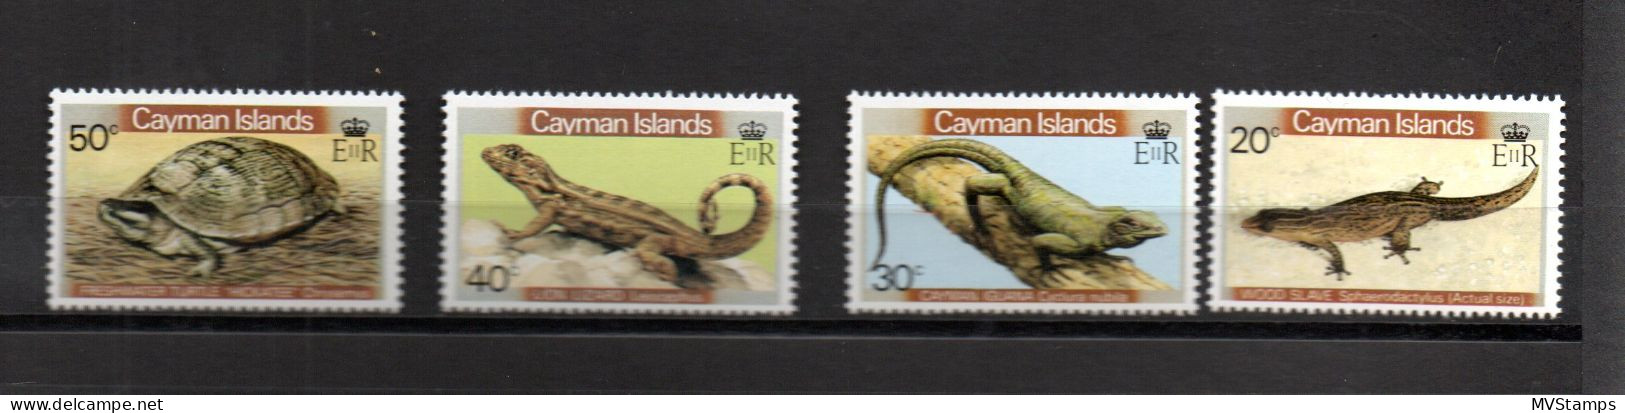 Cayman Islands 1981 Old Set Turtle/lizard Stamps (Michel 471/74) Nice MNH - Iles Caïmans